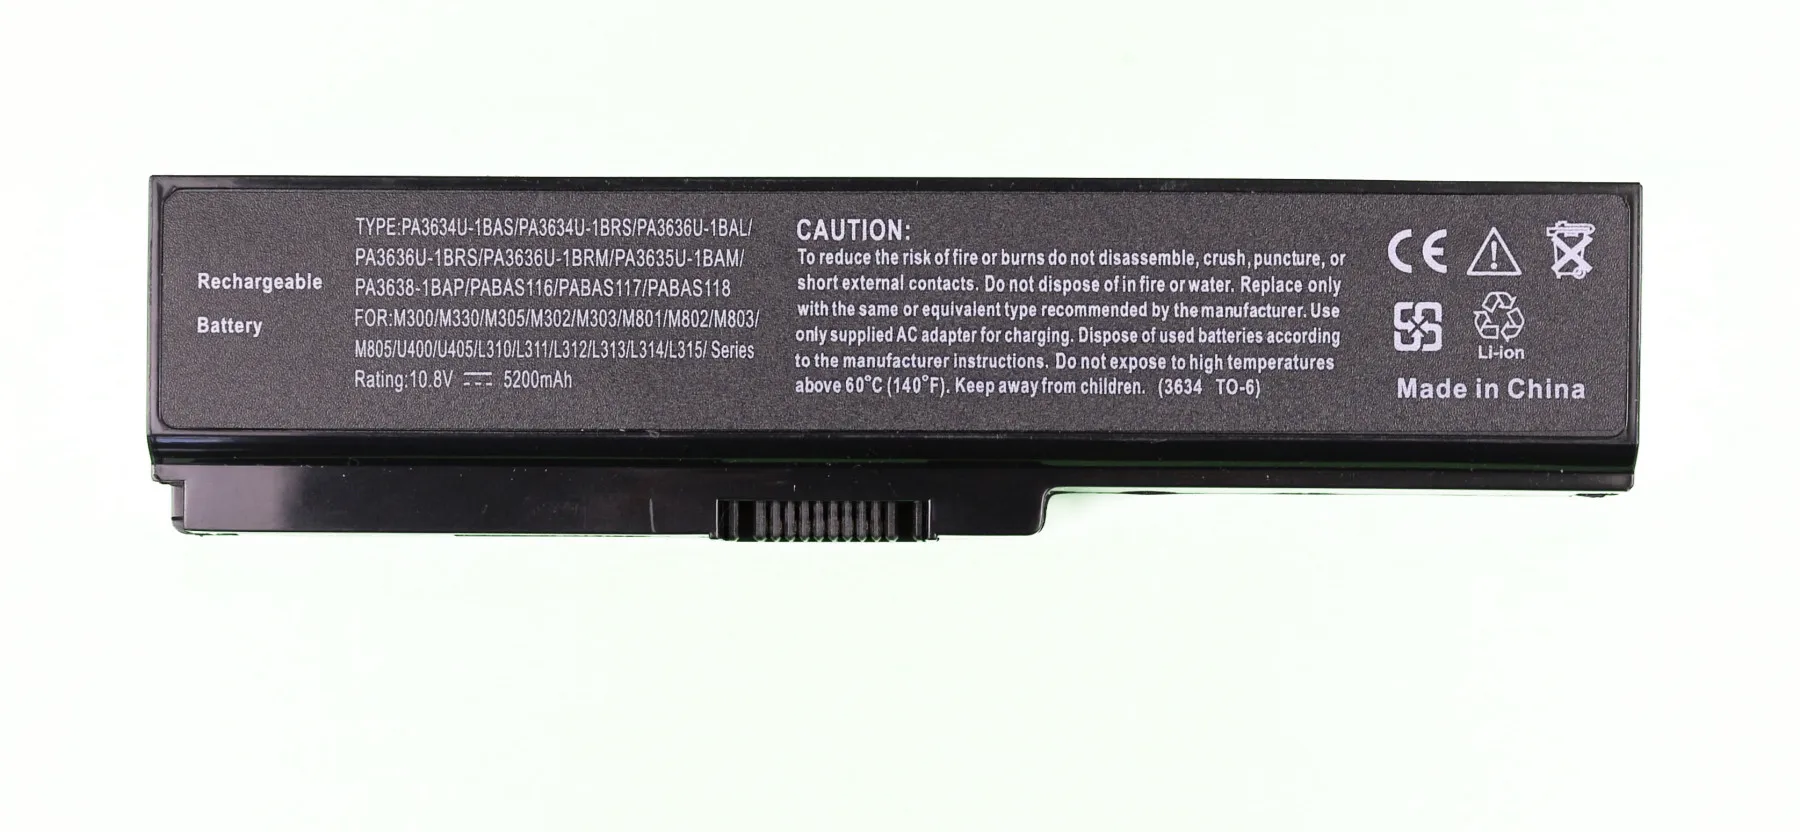 Аккумулятор для Toshiba Satellite L750D 112 (батарея)|Аккумуляторы ноутбуков| |